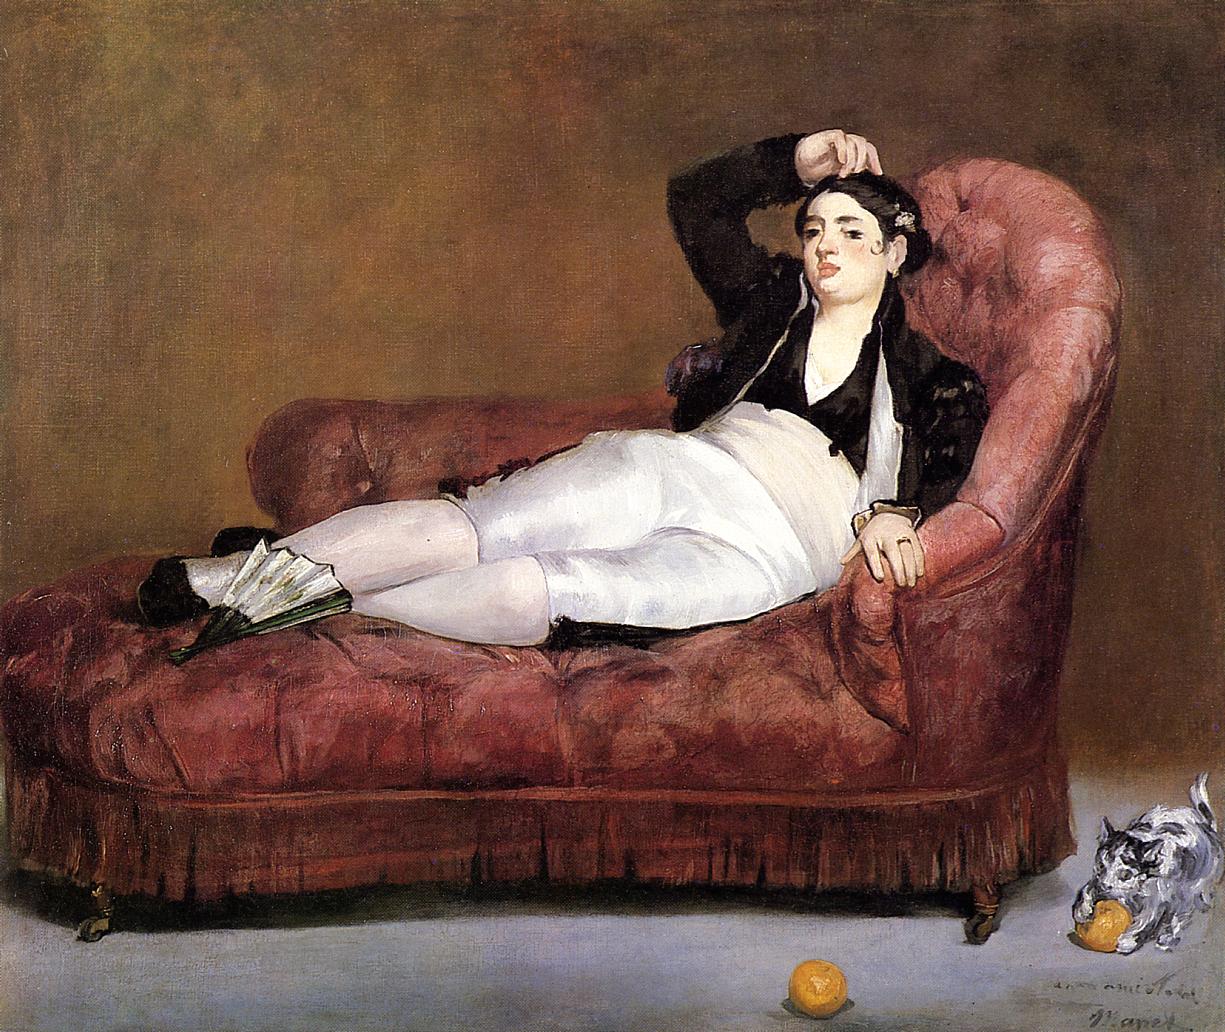 Эдуард Мане. "Лежащая женщина в испанском костюме". 1862.